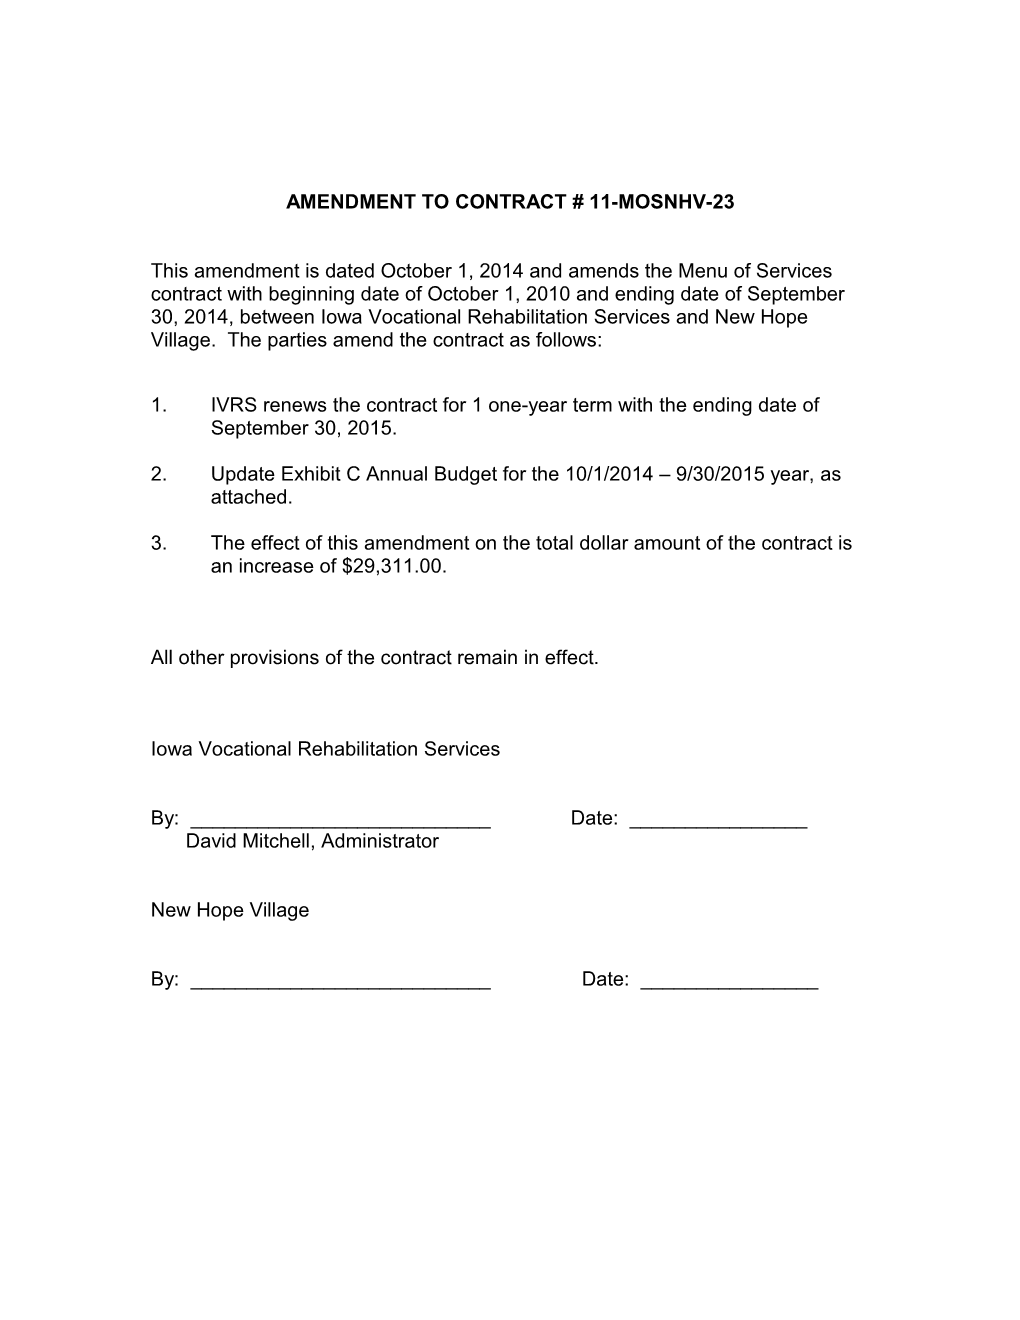 Amendment to Establishment Agreement Contract